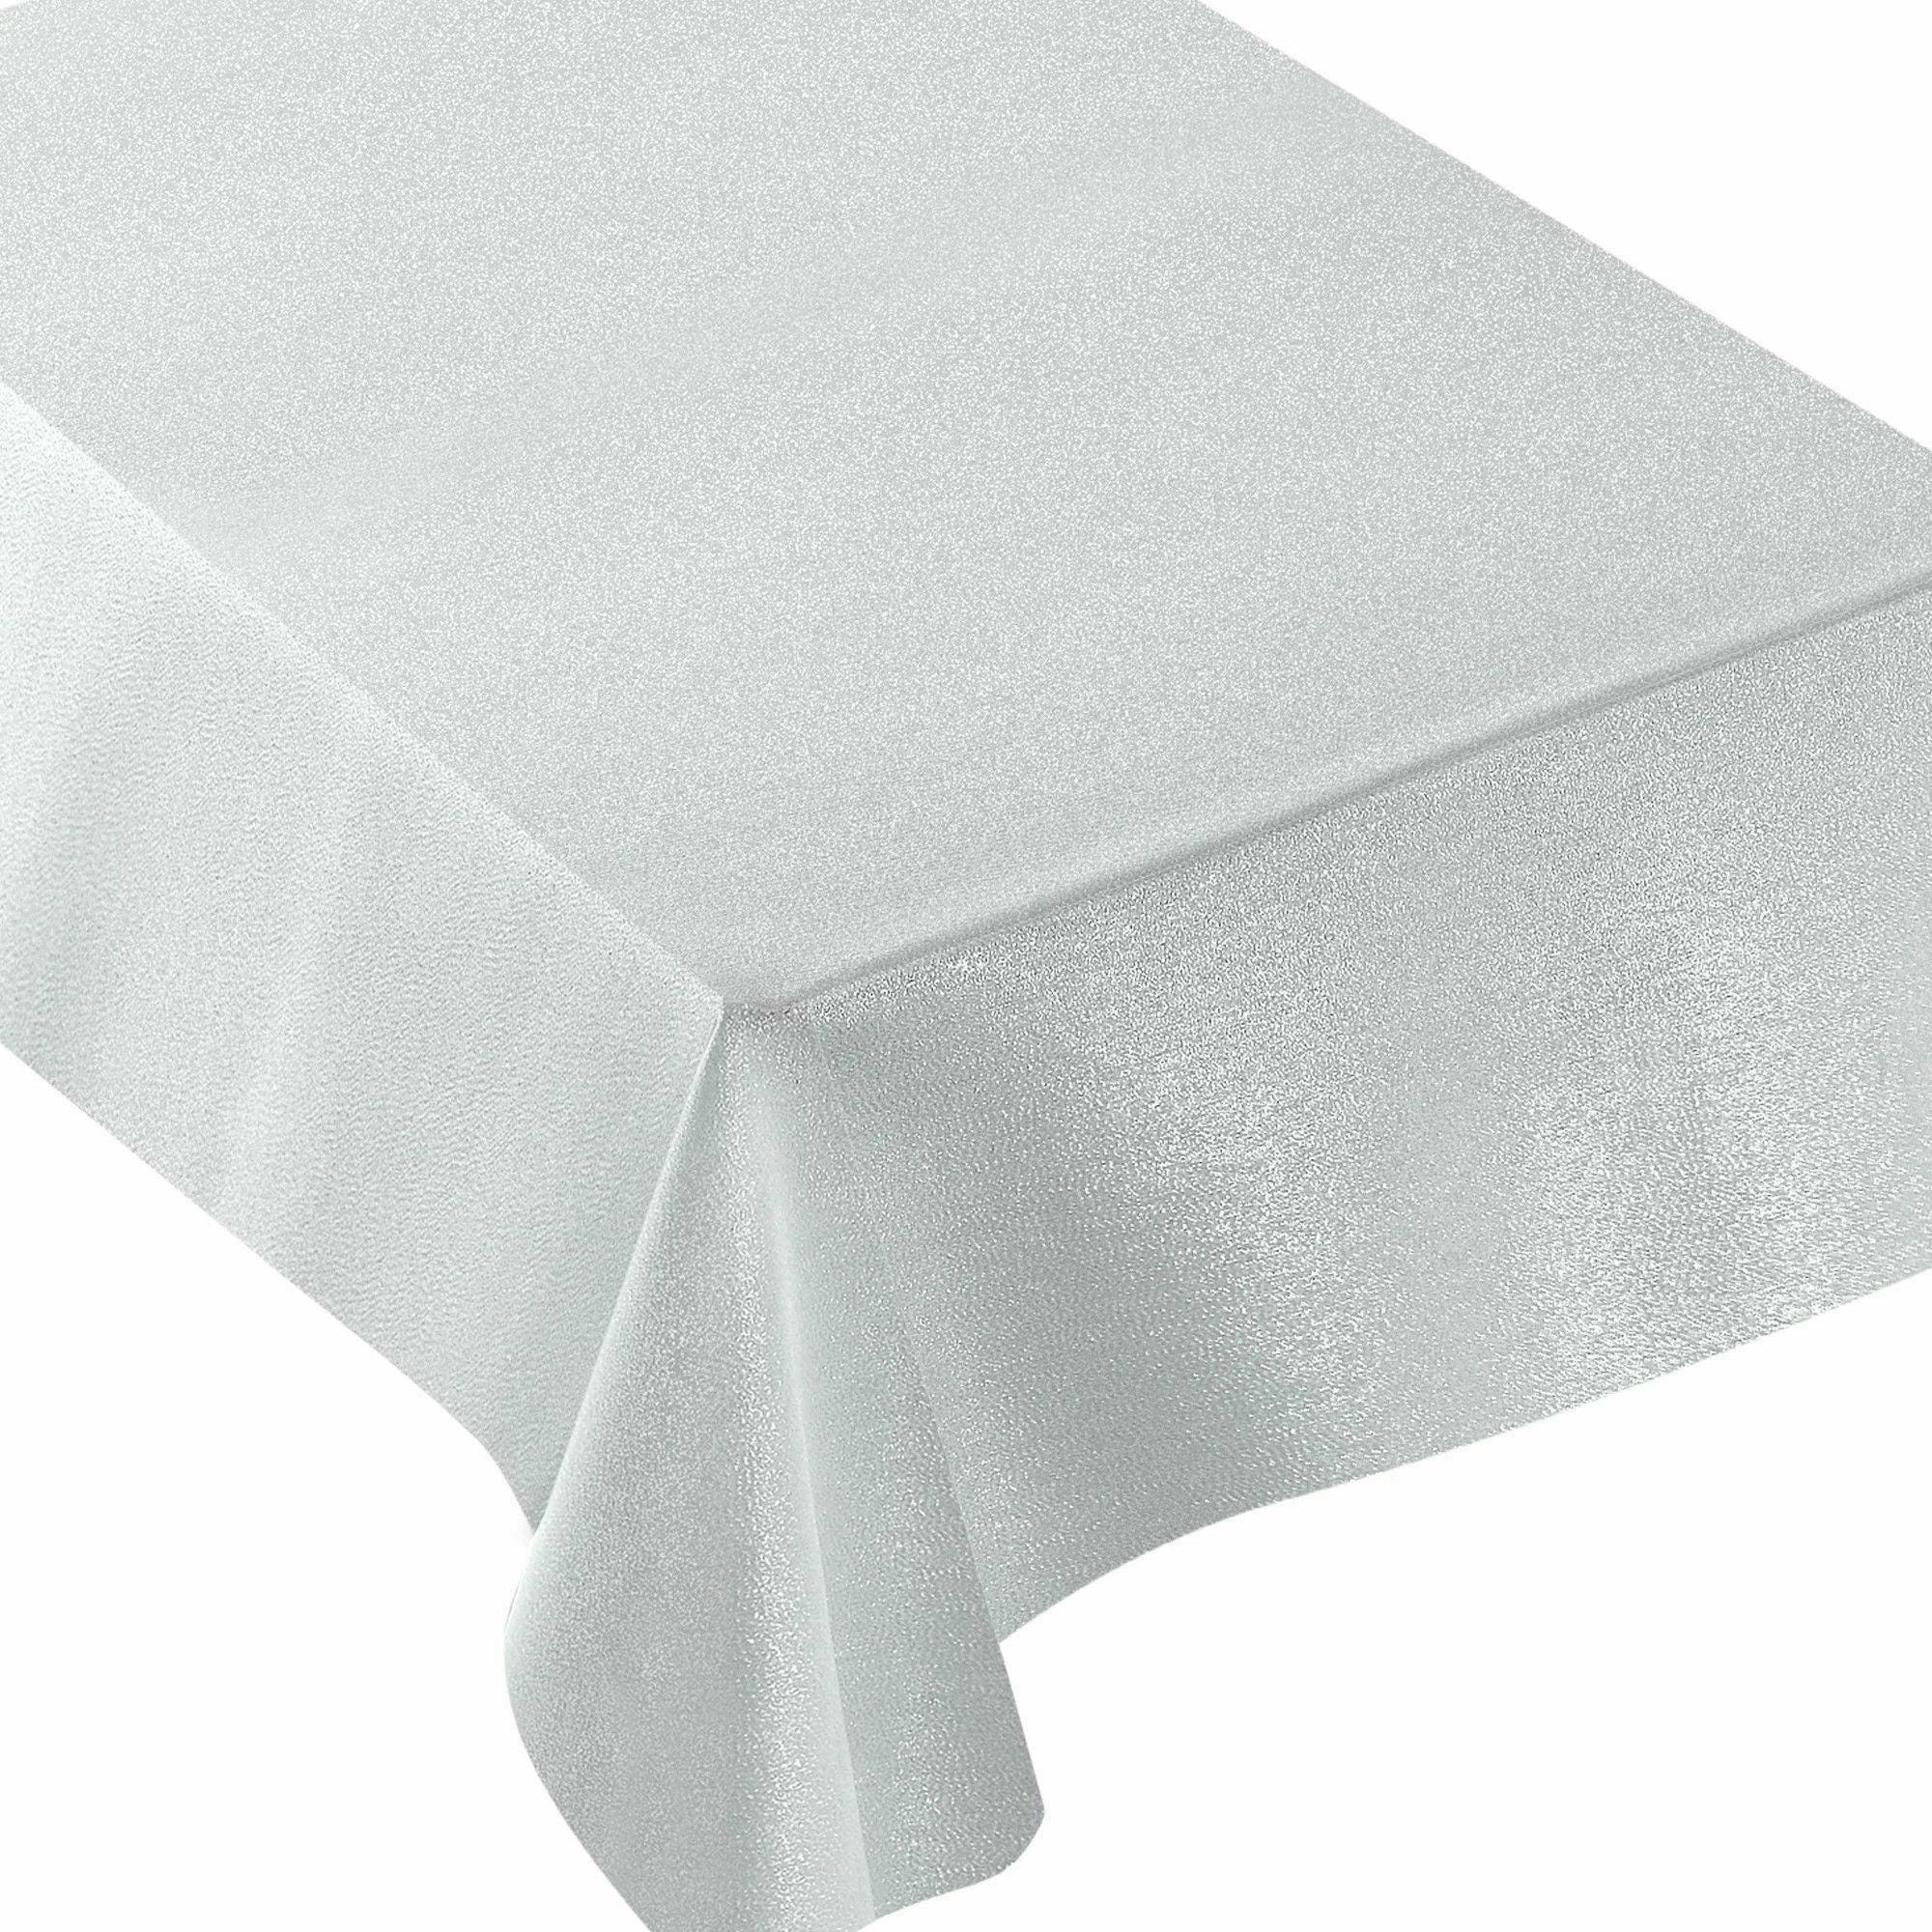 Amscan BASIC Metallic Tablecloth, 60" x 84" - White/Silver